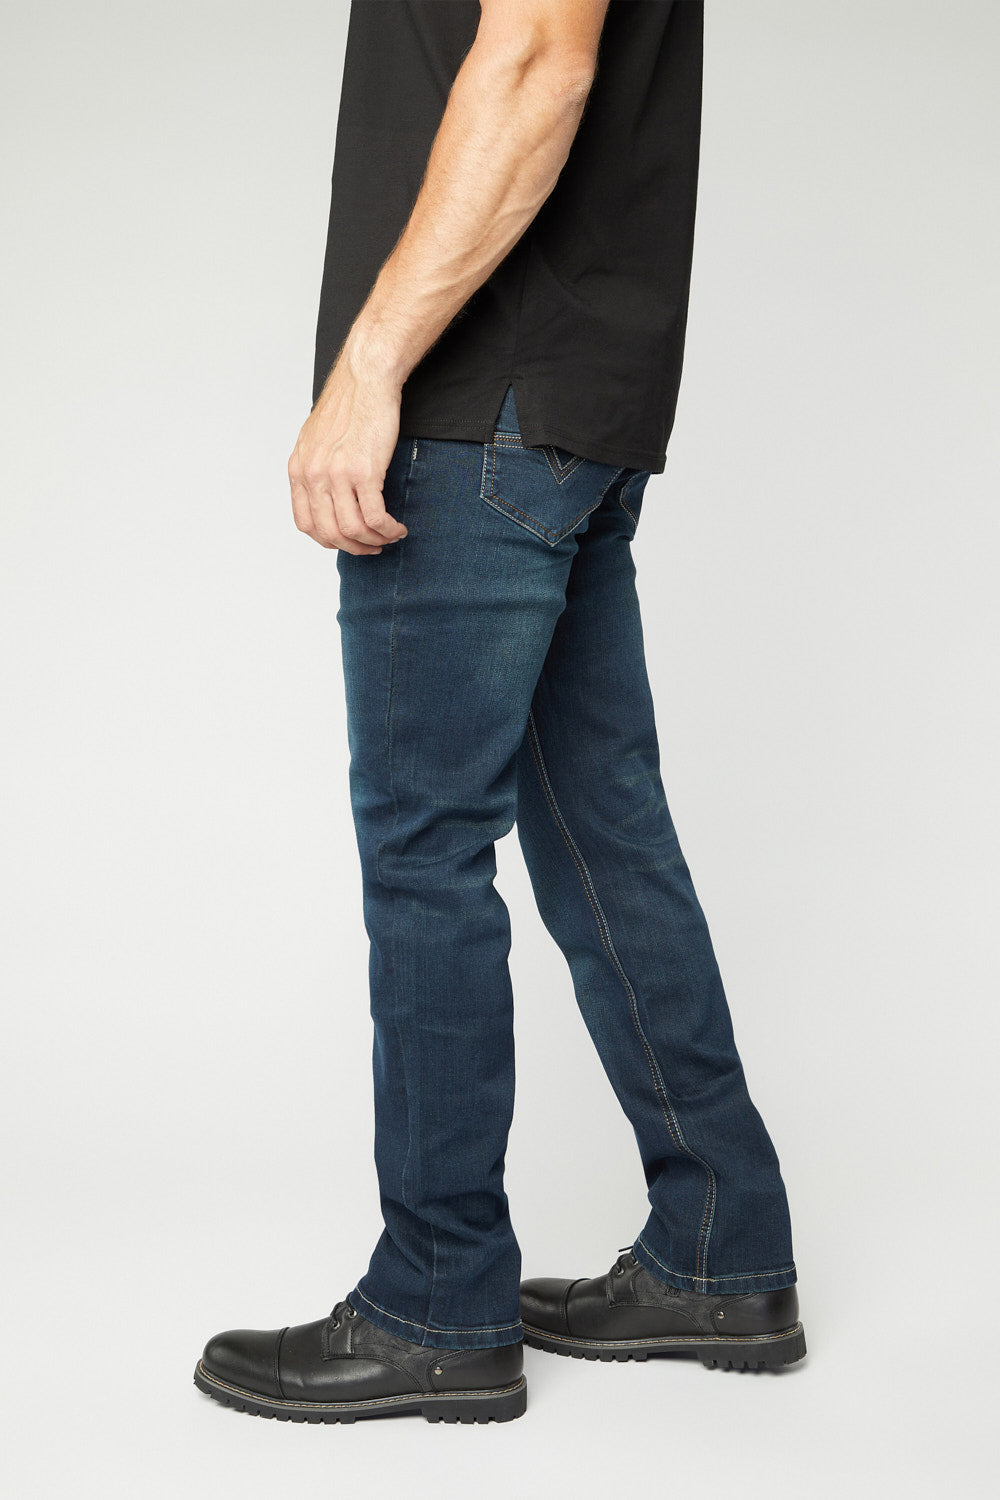 Pax Men's Dk. Blue Aged Slim Stretch Jeans